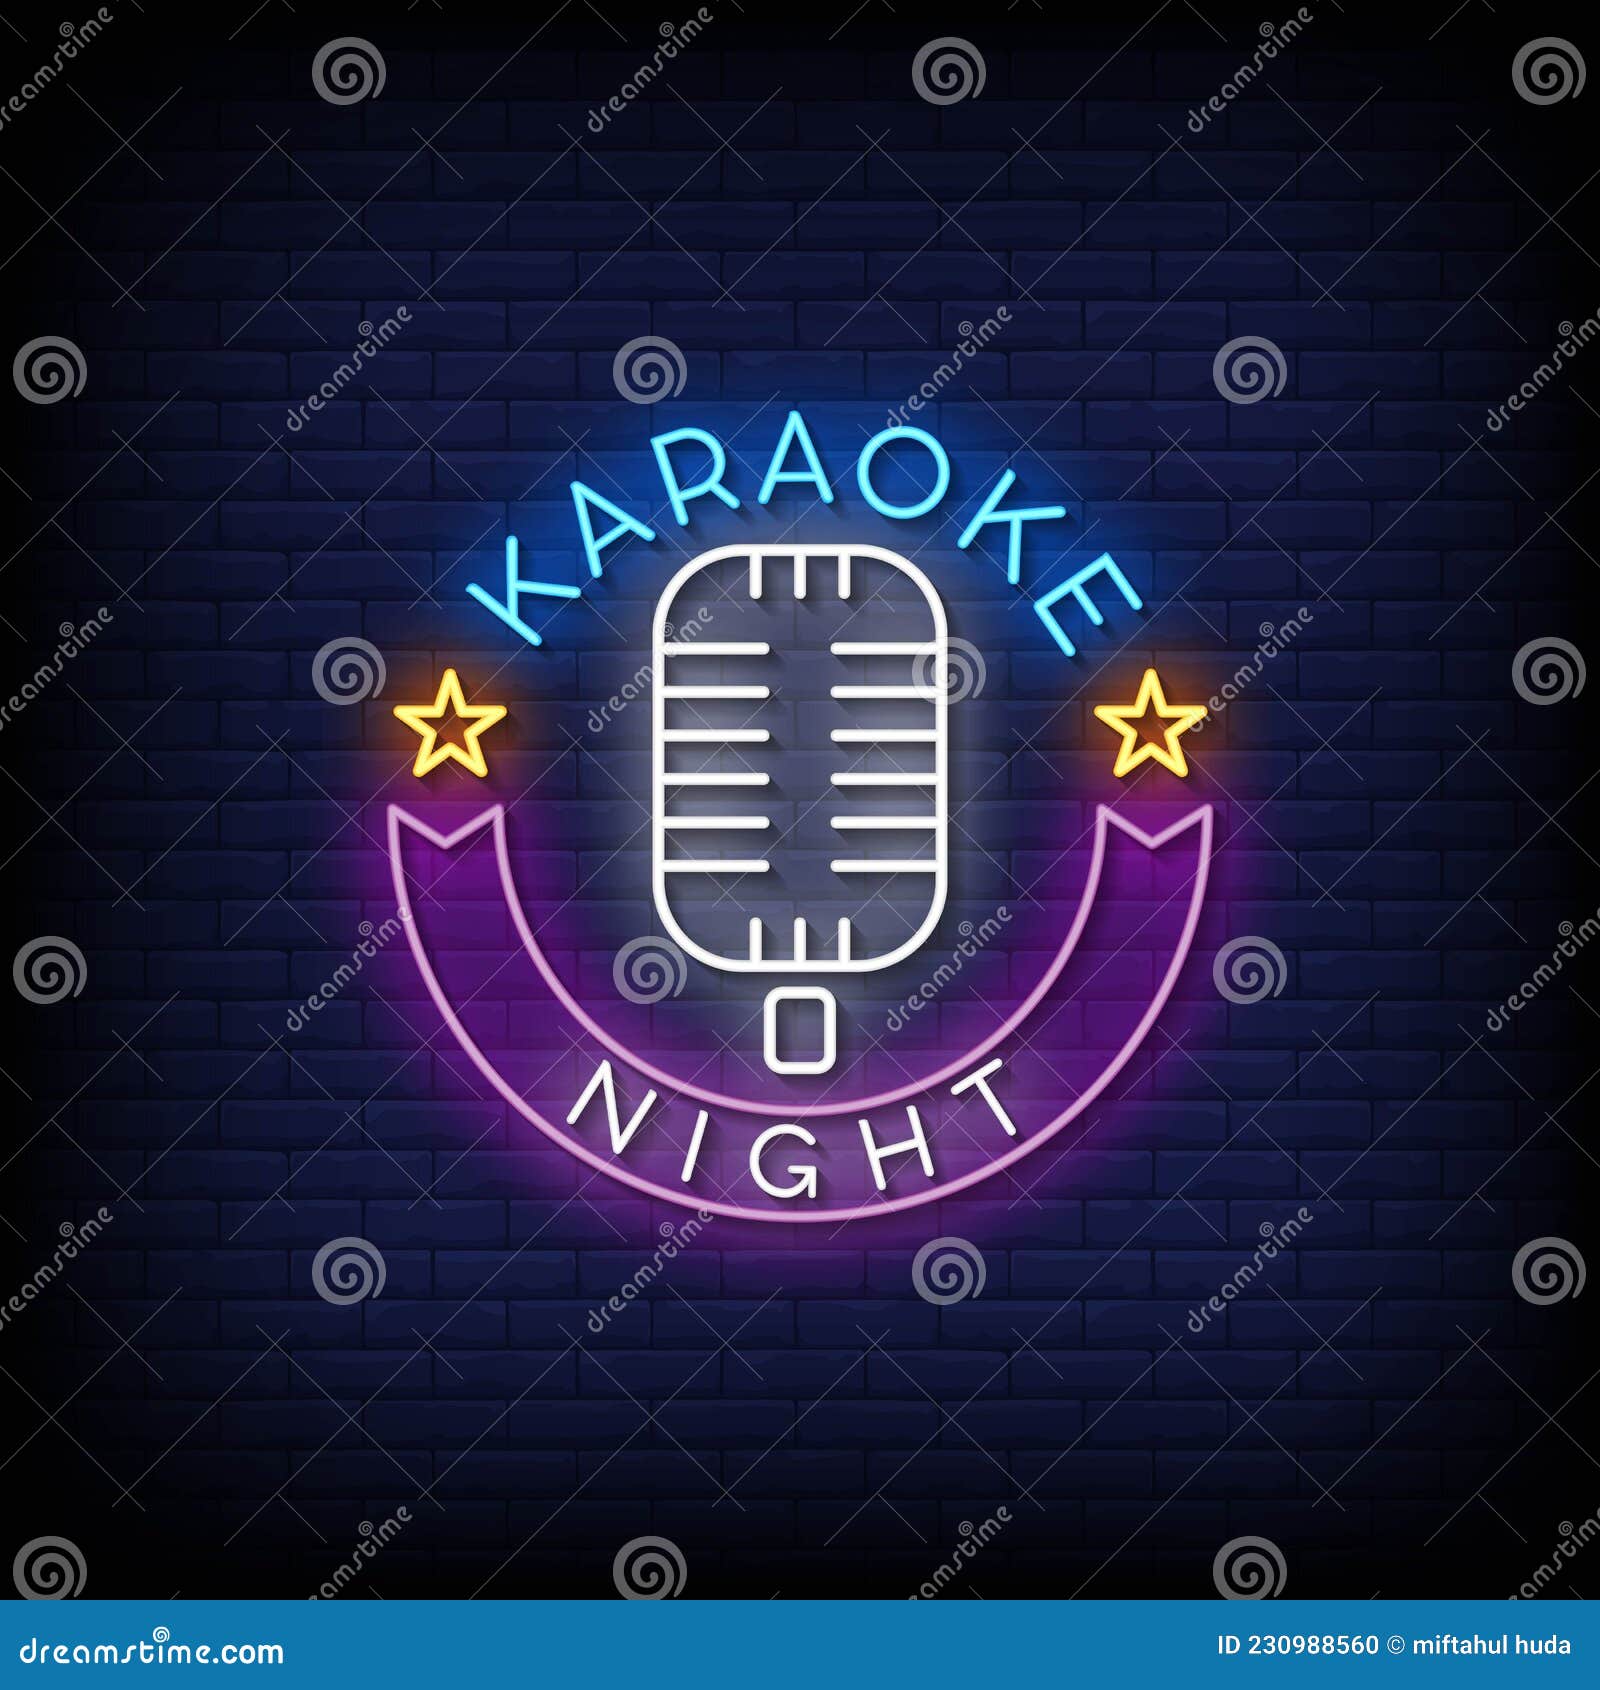 Karaoke Night Neon Signs Style Text Vector Stock Vector - Illustration of  design, emblem: 230988560